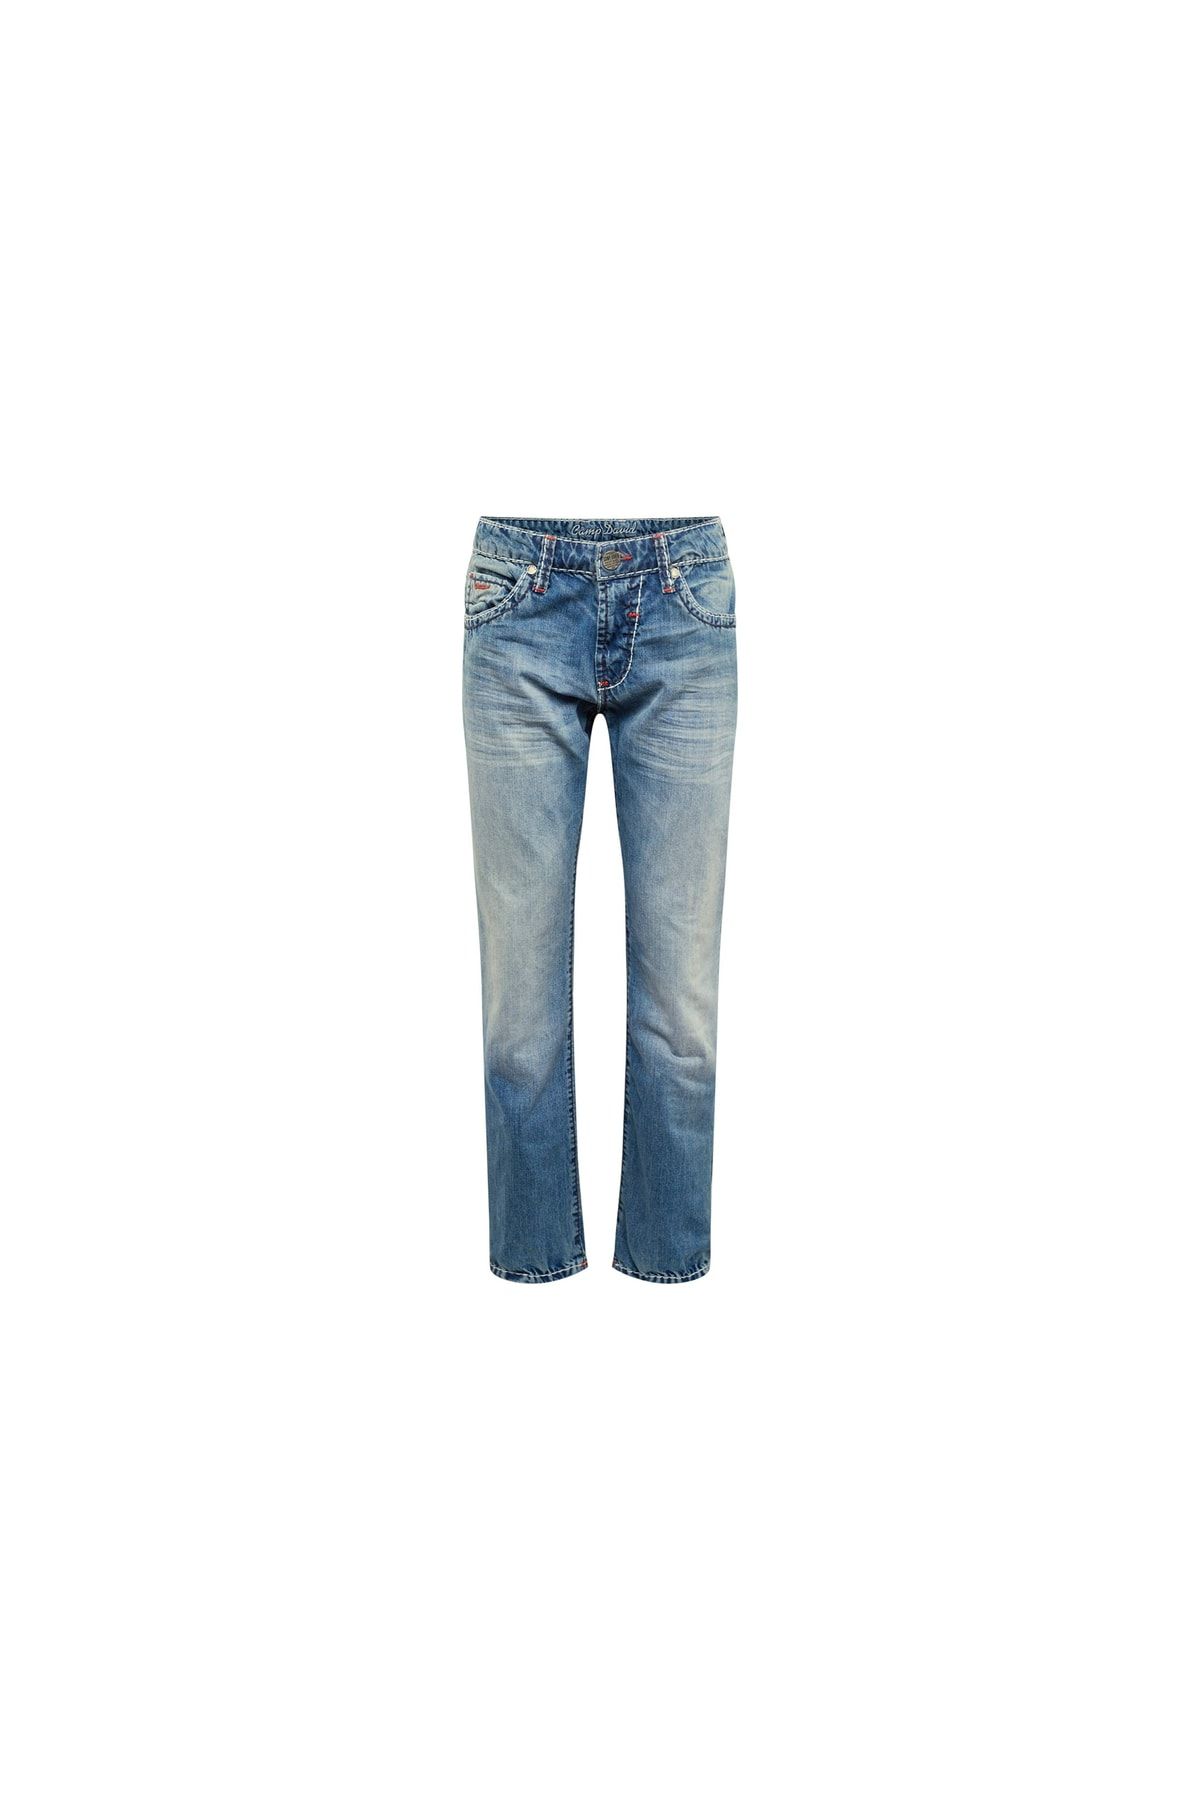 Camp David Jeans online shoppen | Stylishe Denim–Mode – Trendyol